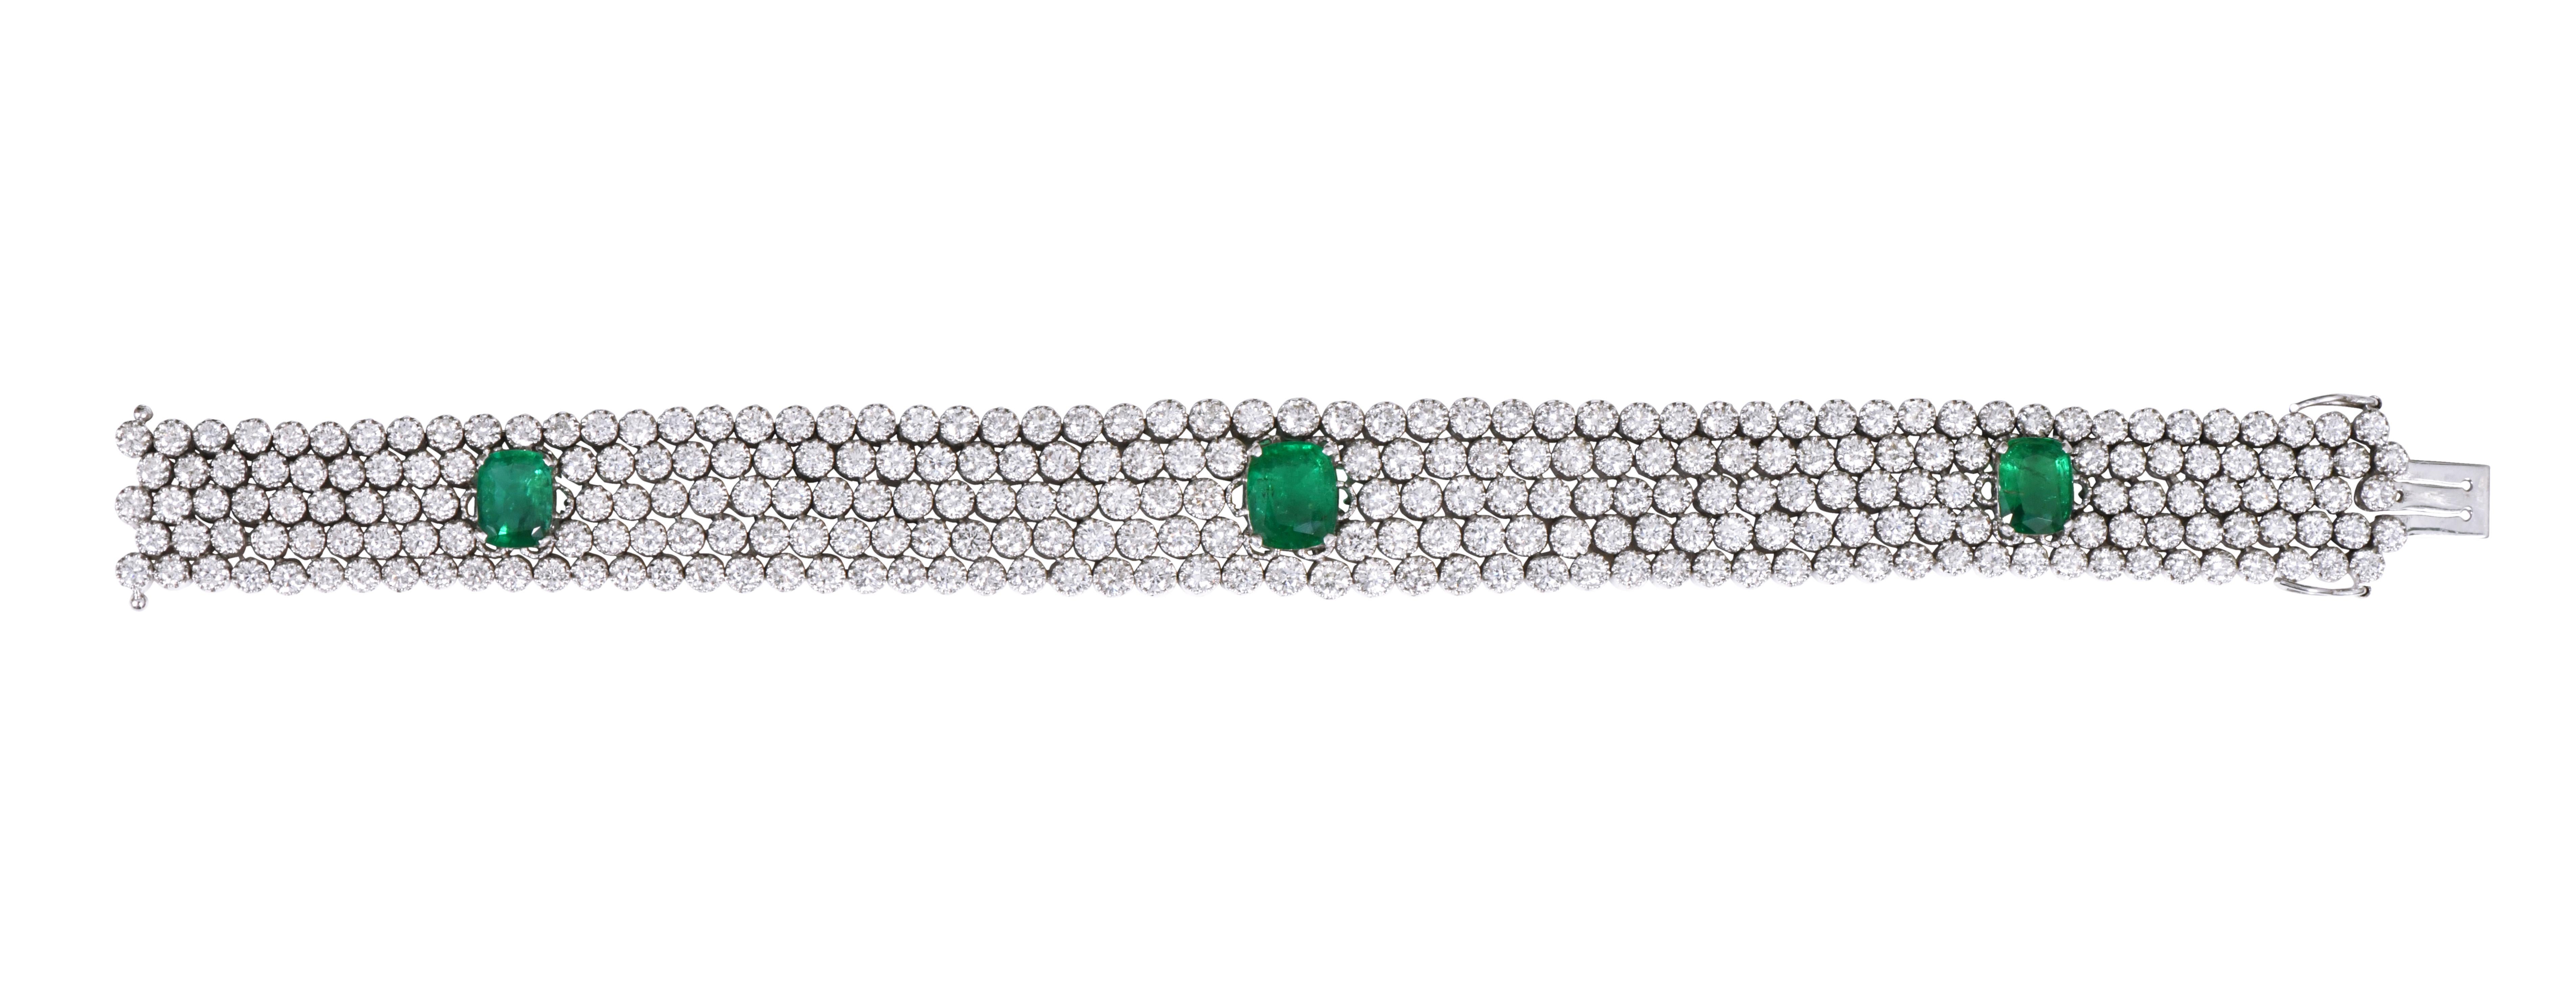 Brilliant Cut 18 Karat White Gold 19.13 Carat Diamond and Emerald Contemporary Bracelet For Sale